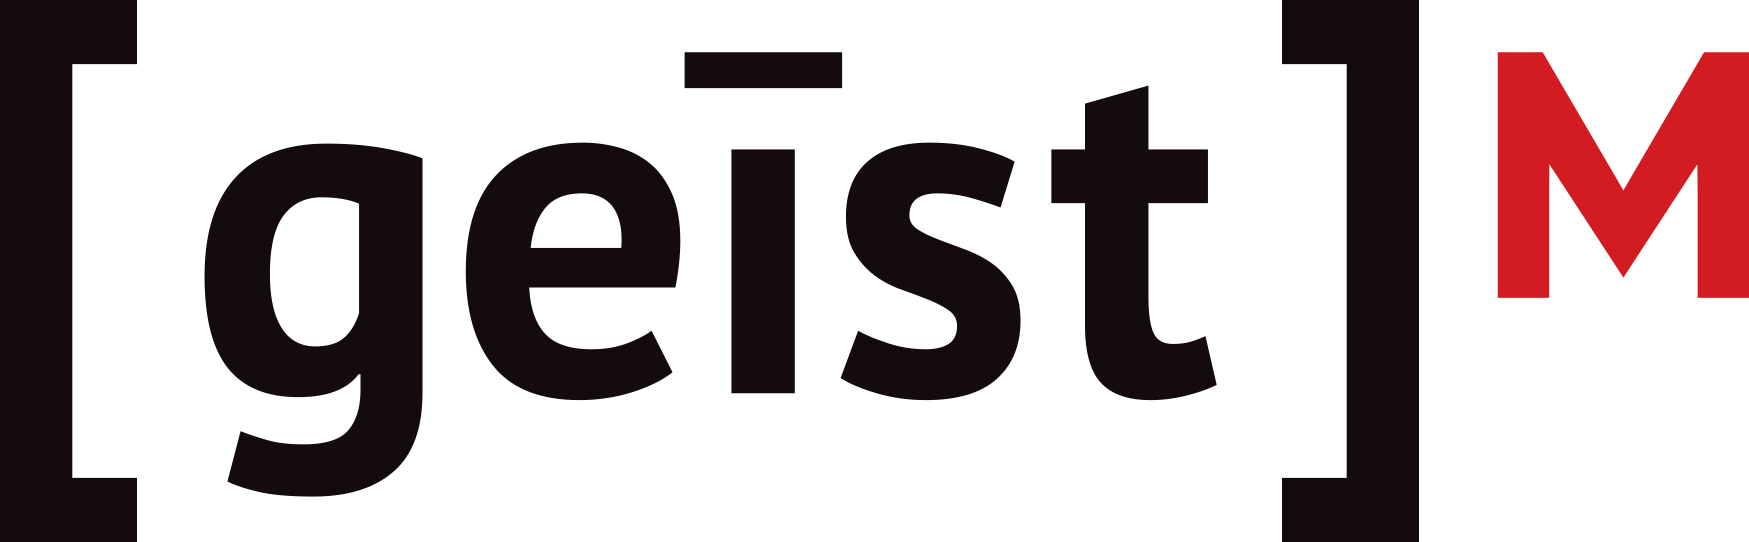 geistm logo